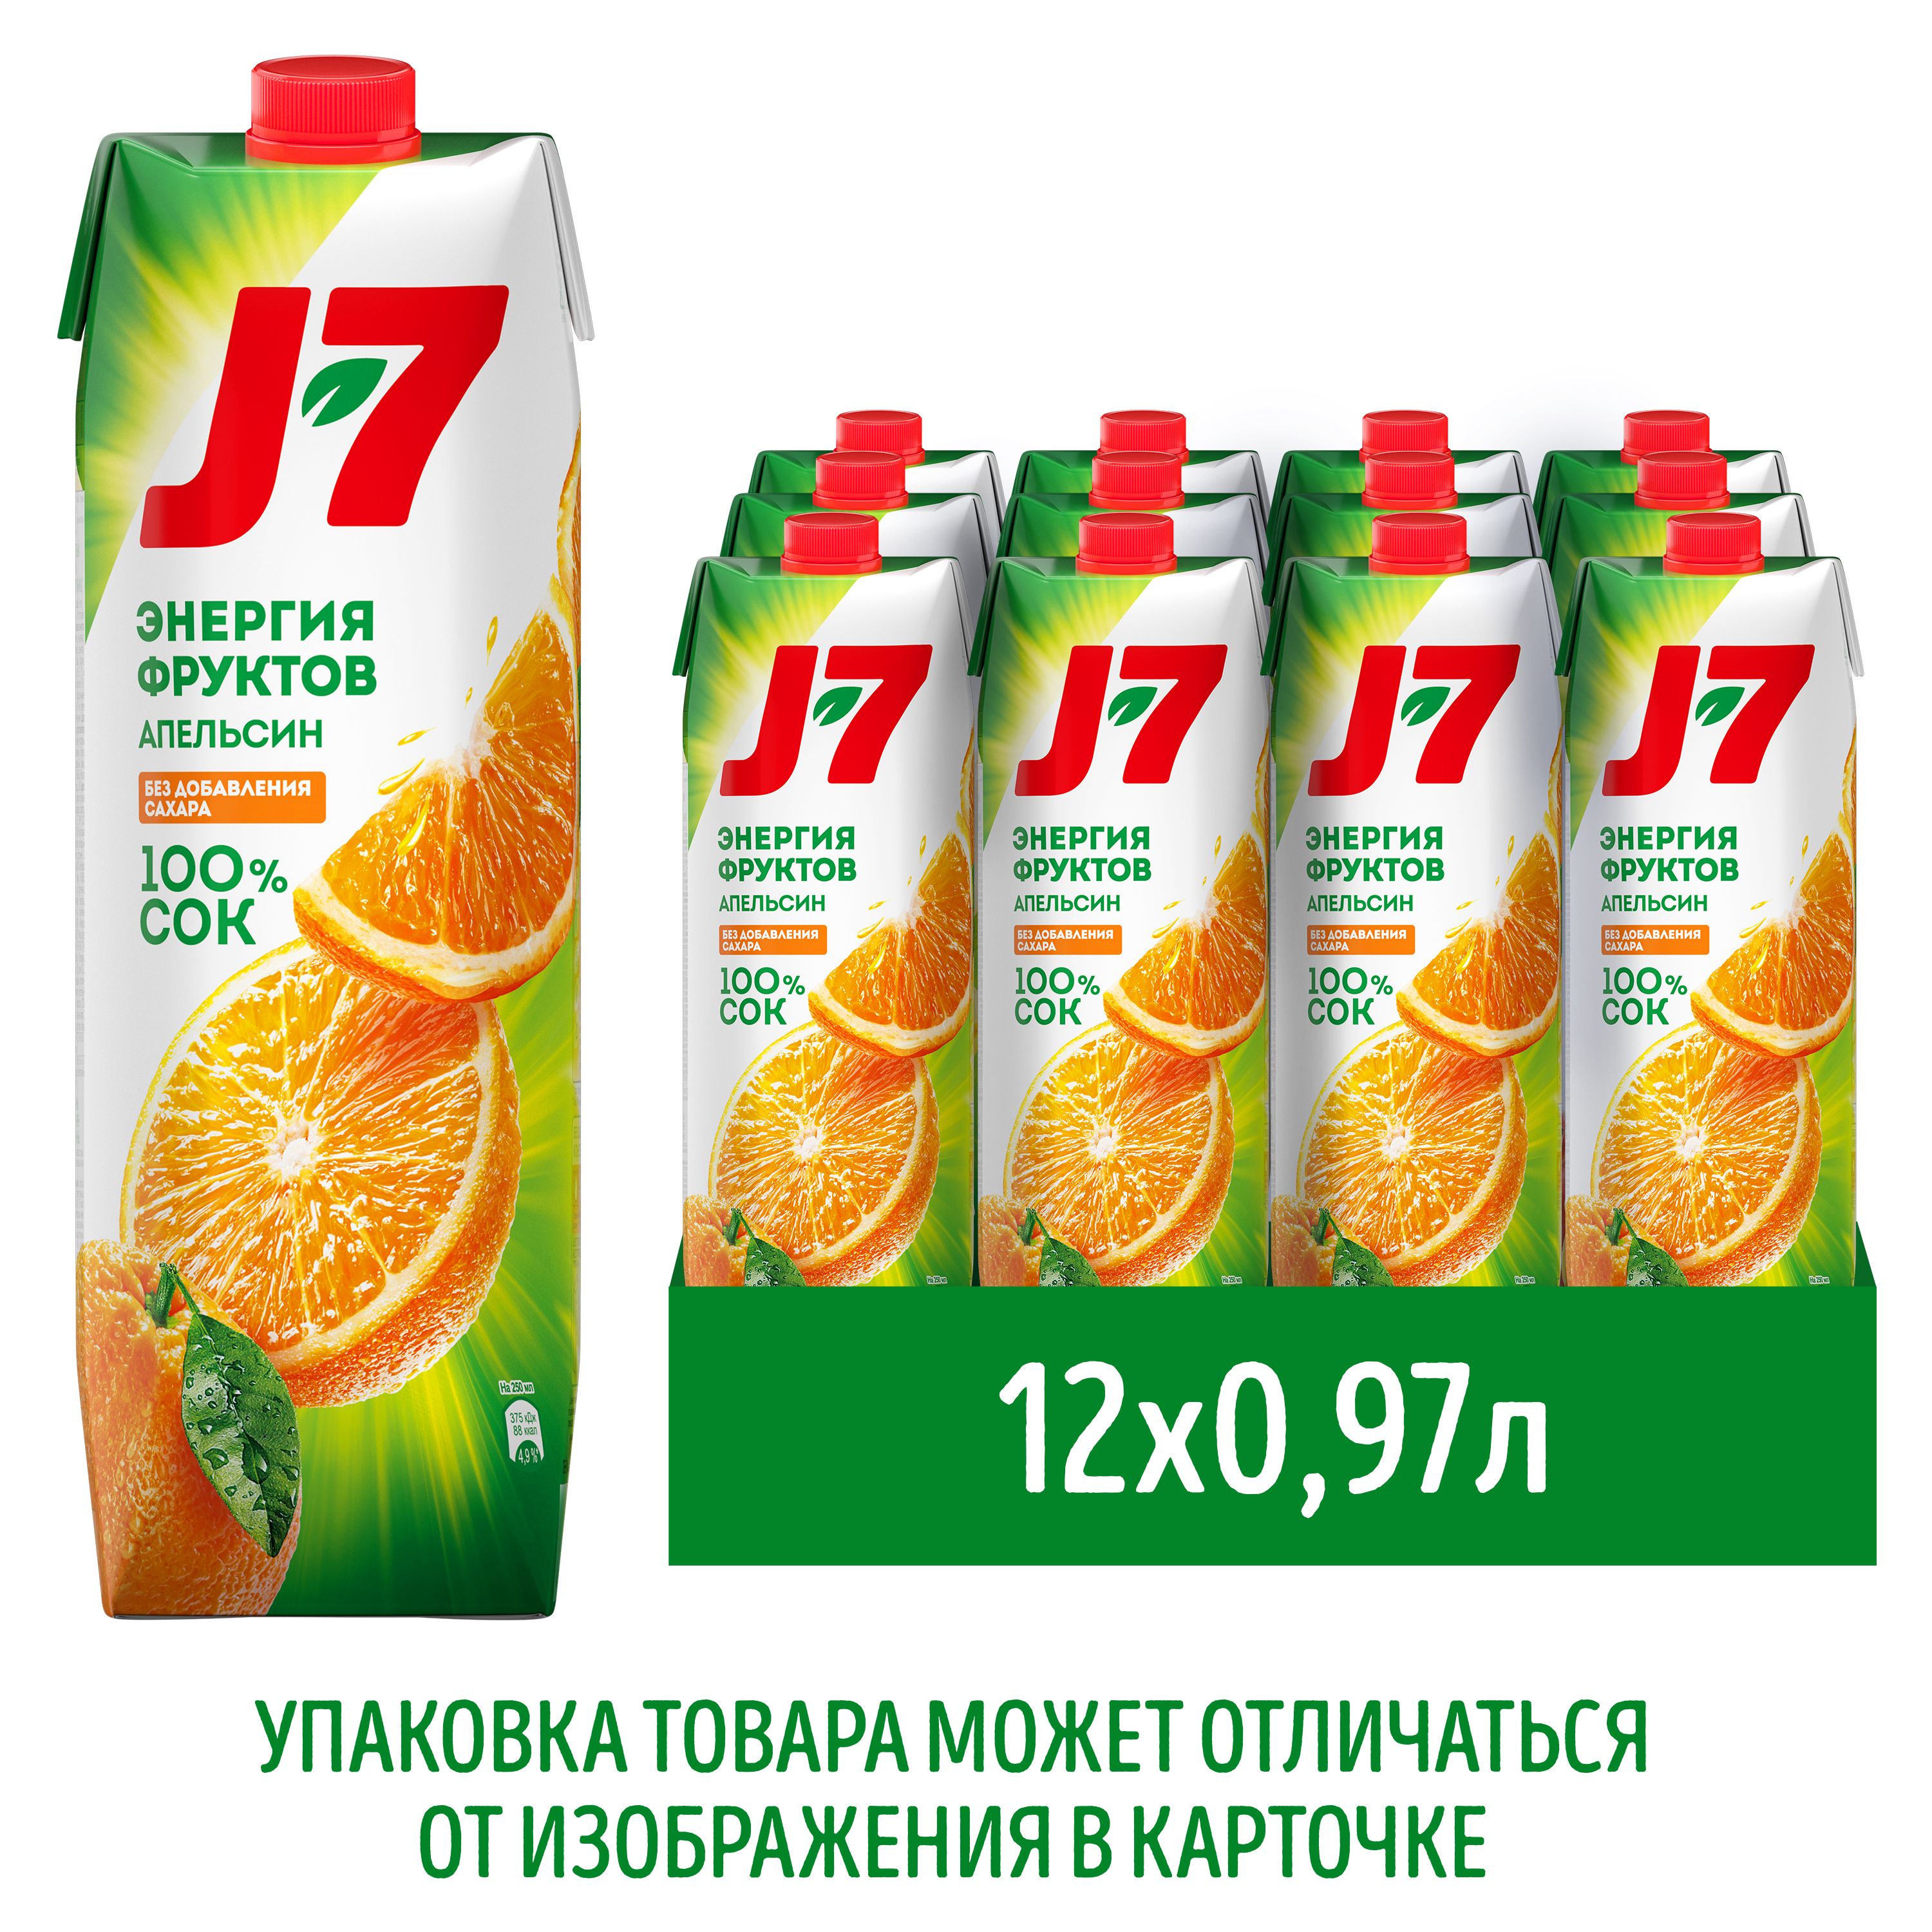 J7 fresh. Сок Джей Севен апельсин. Сок j7 апельсин 0,97л. Джей Севен 100% сок. Сок j7 апельсин 0.3.